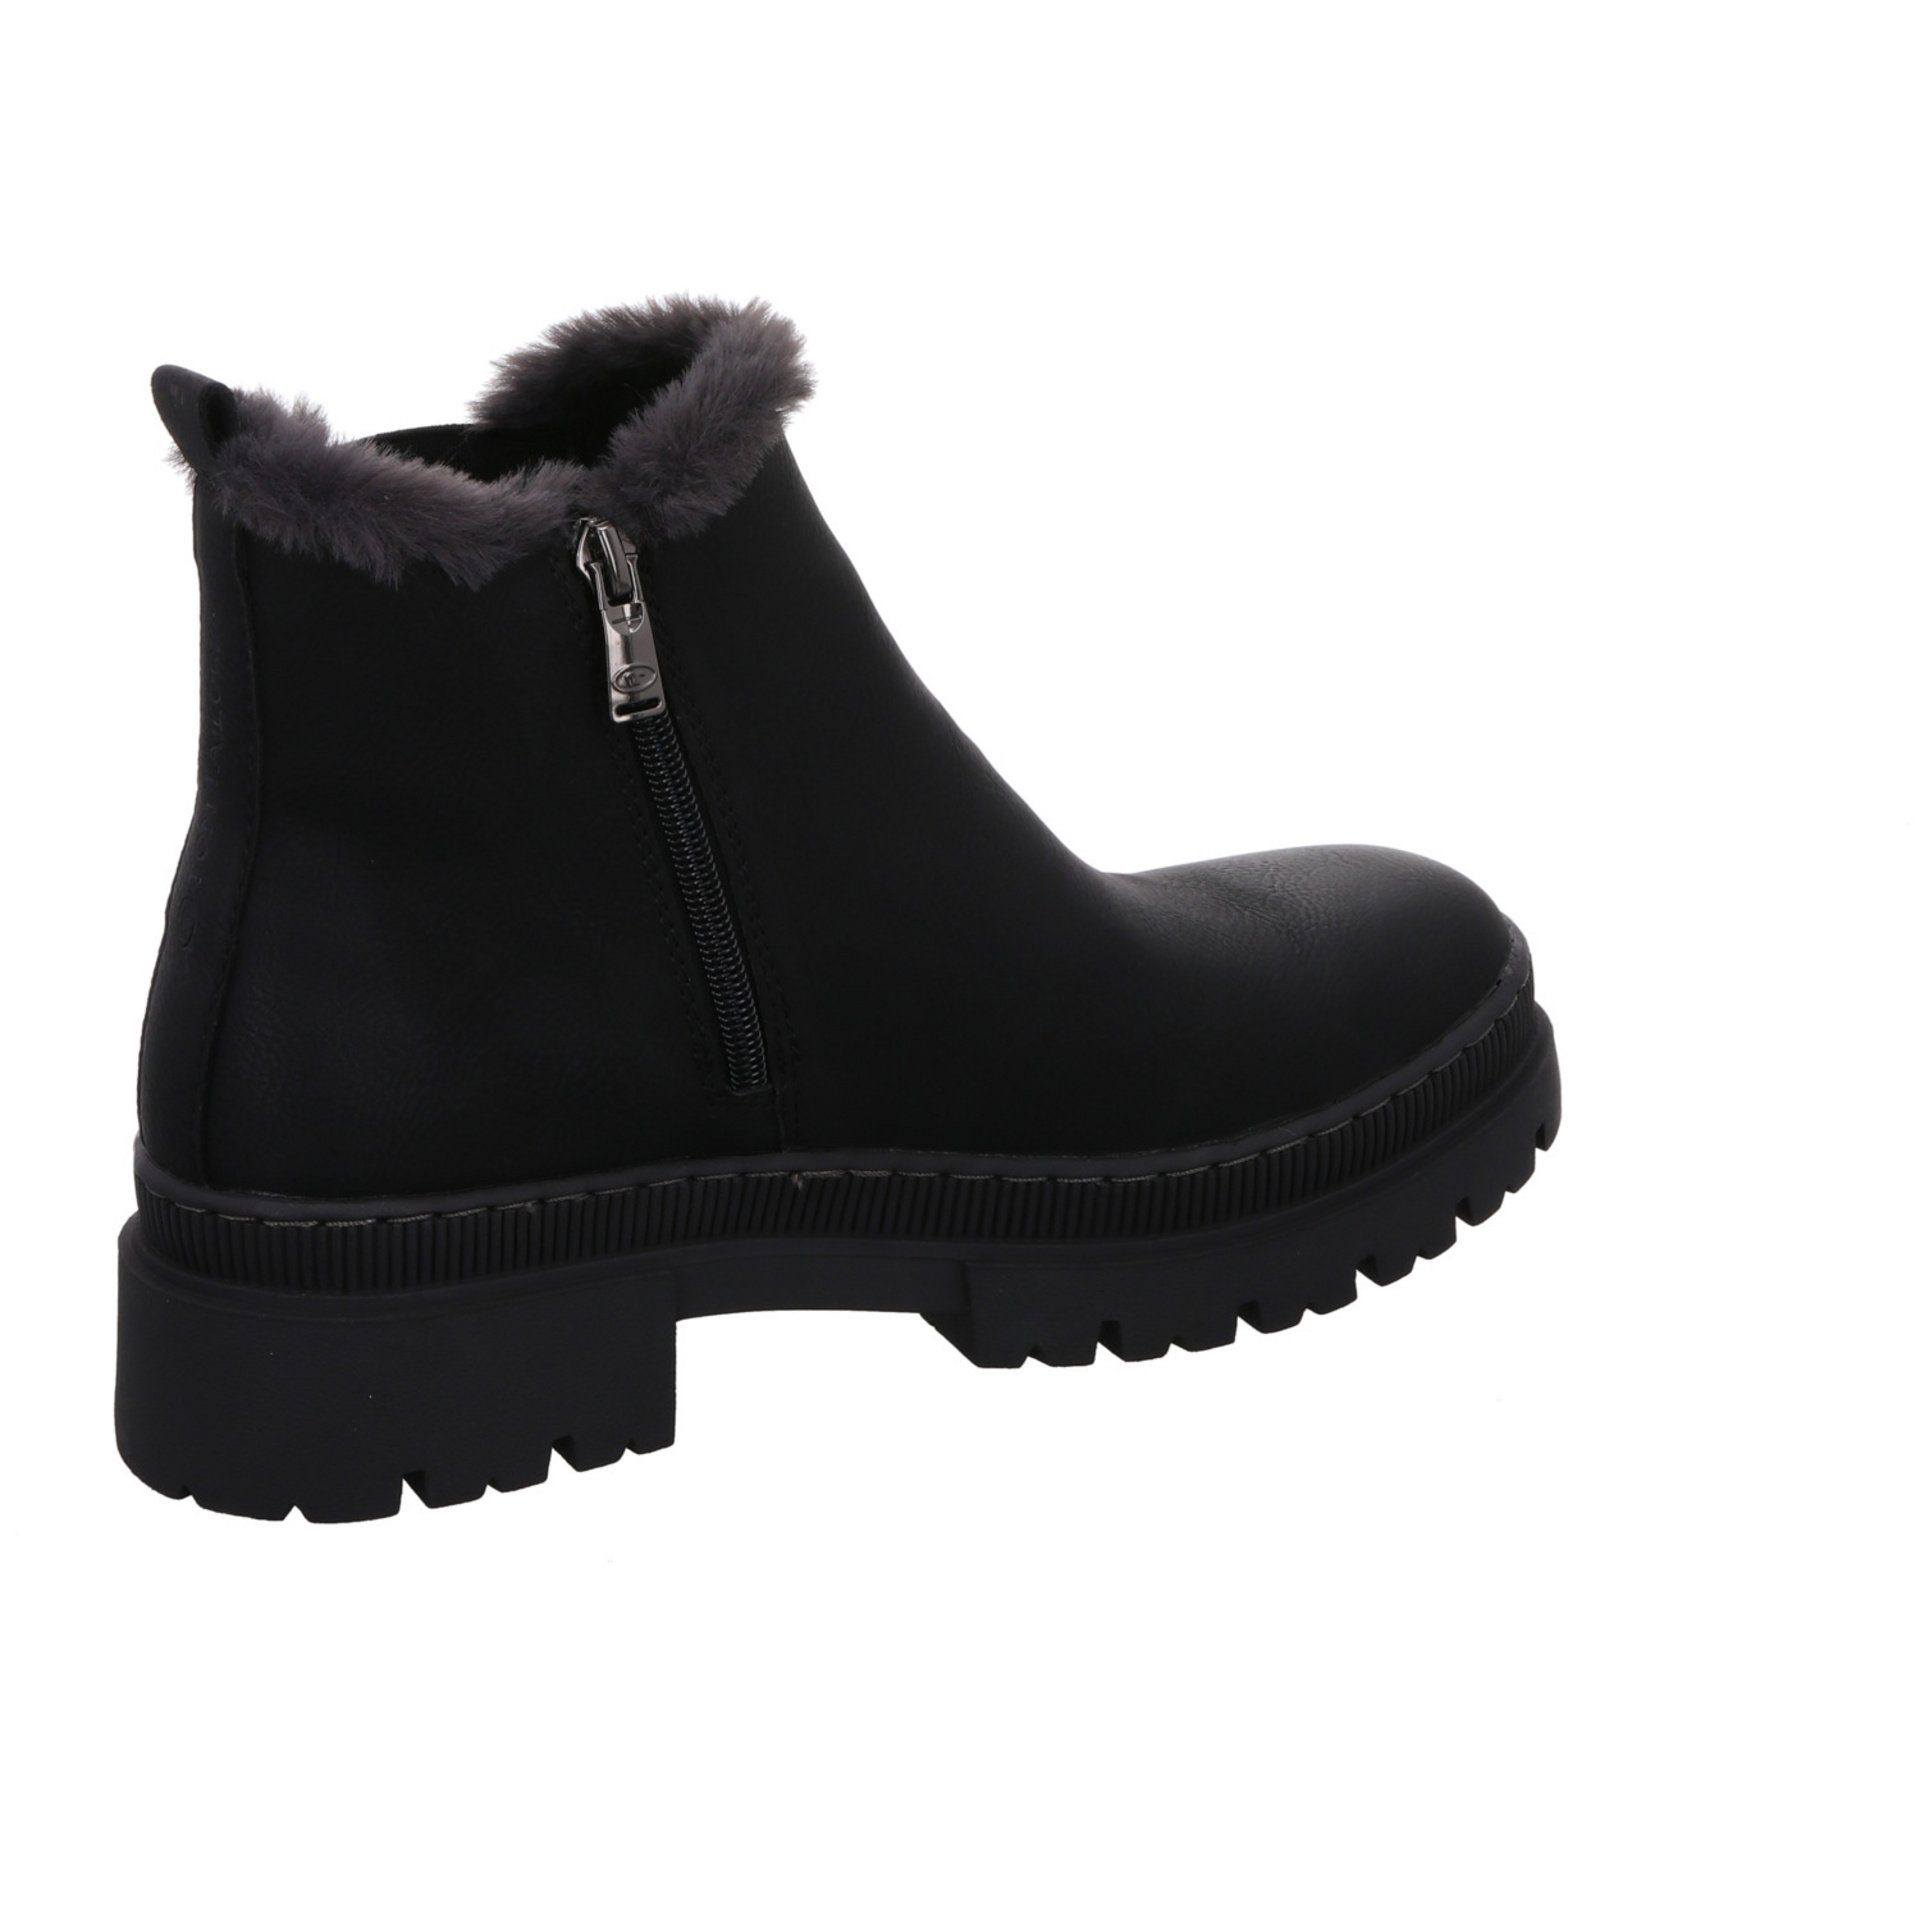 Stiefel Synthetik Boots black Chelsea Schuhe TOM Damen TAILOR Stiefel